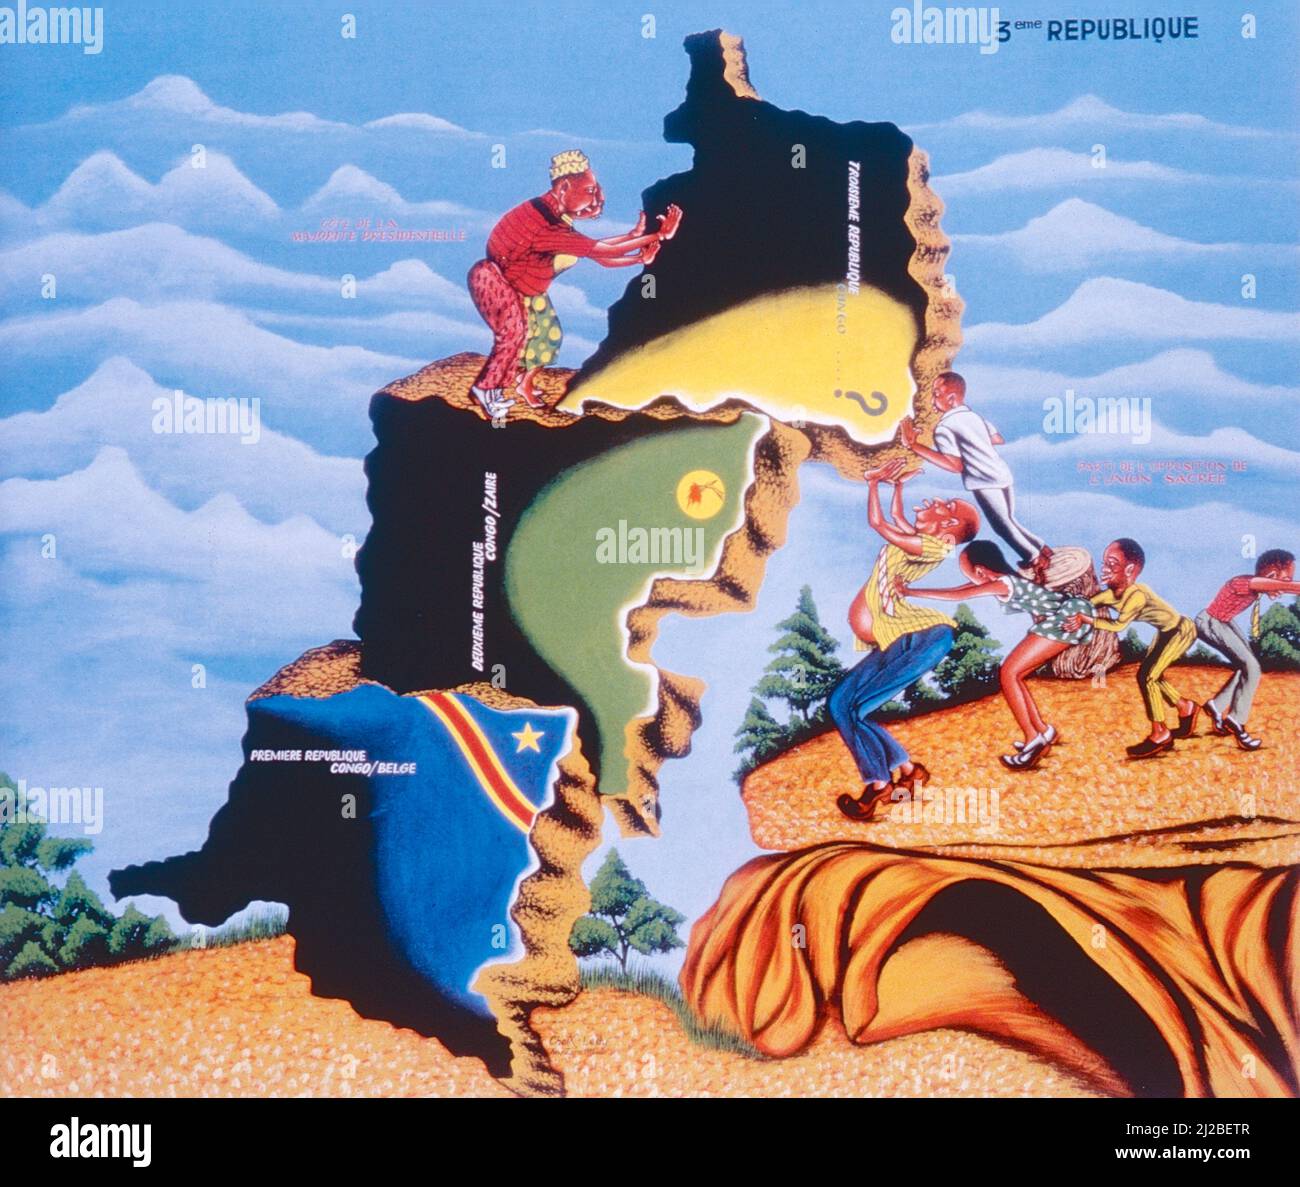 Third Republic, artwork by Congolese artist Cheik Ledy, 1995 Stock Photo